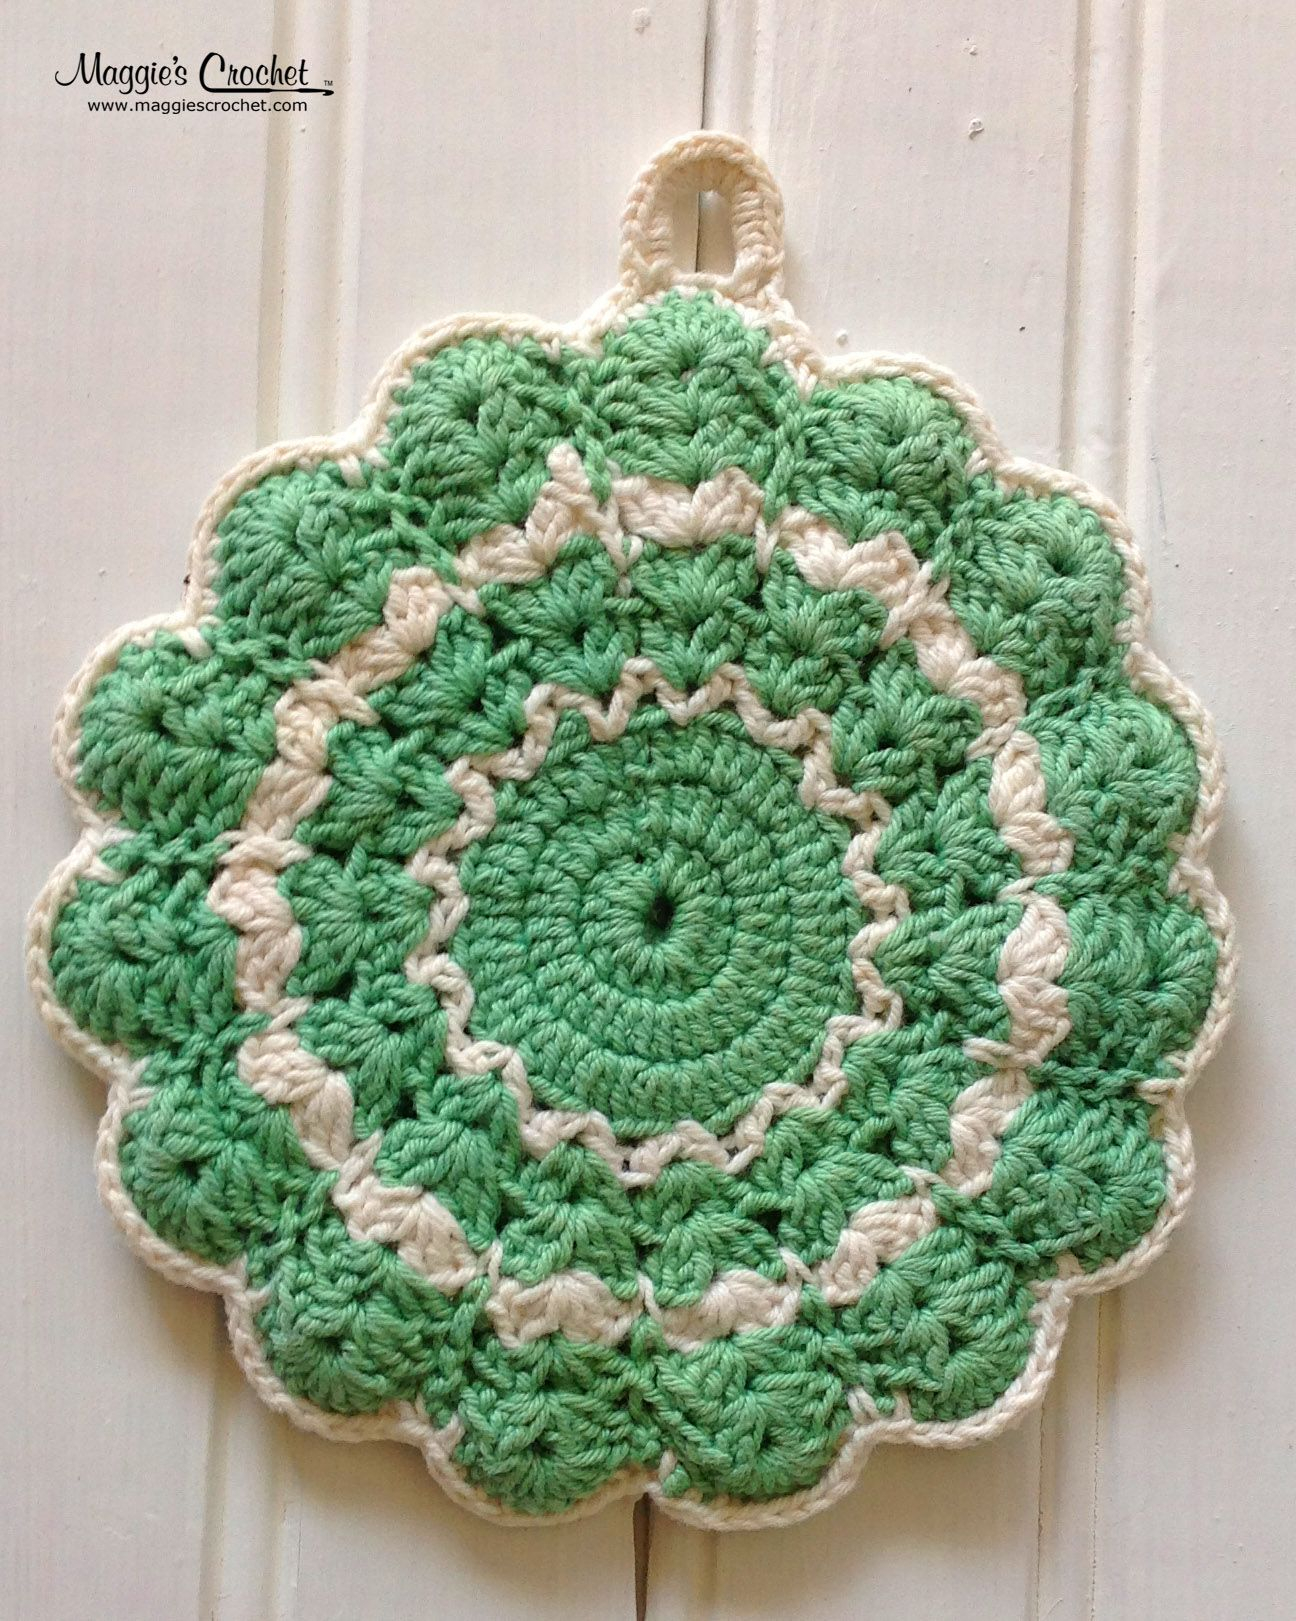 Vintage Crochet Potholders Free Patterns Pin Lisa Ault Corn Maiden On Crochet Potholder Patterns